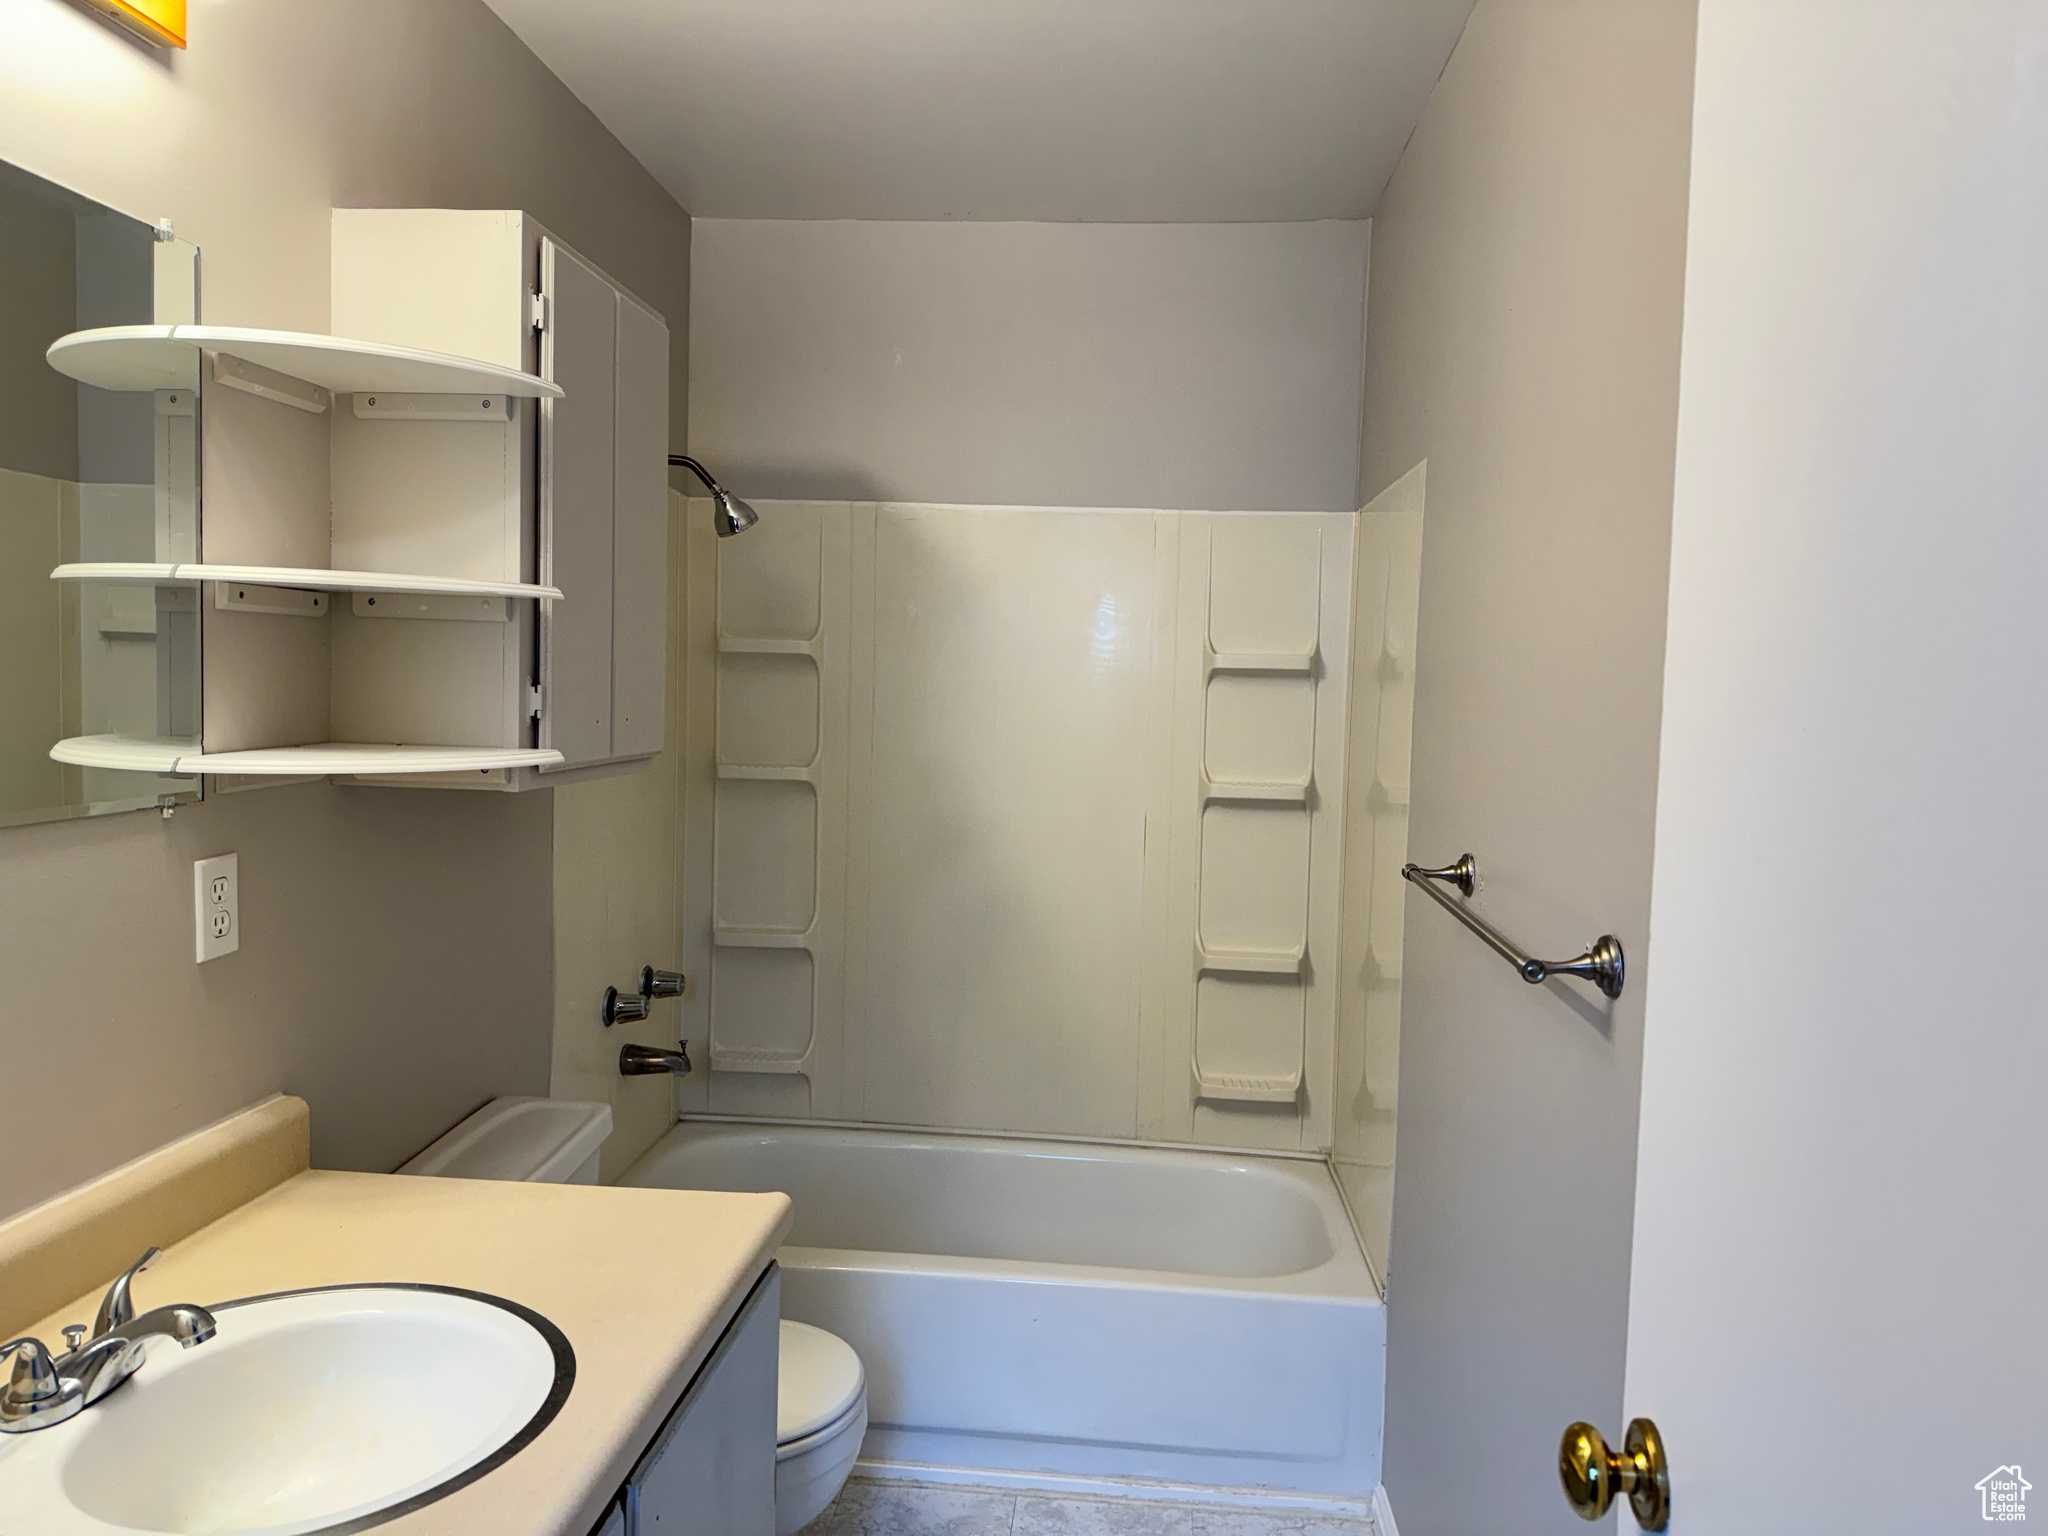 Full bathroom with washtub / shower combination, oversized vanity, tile floors, and toilet